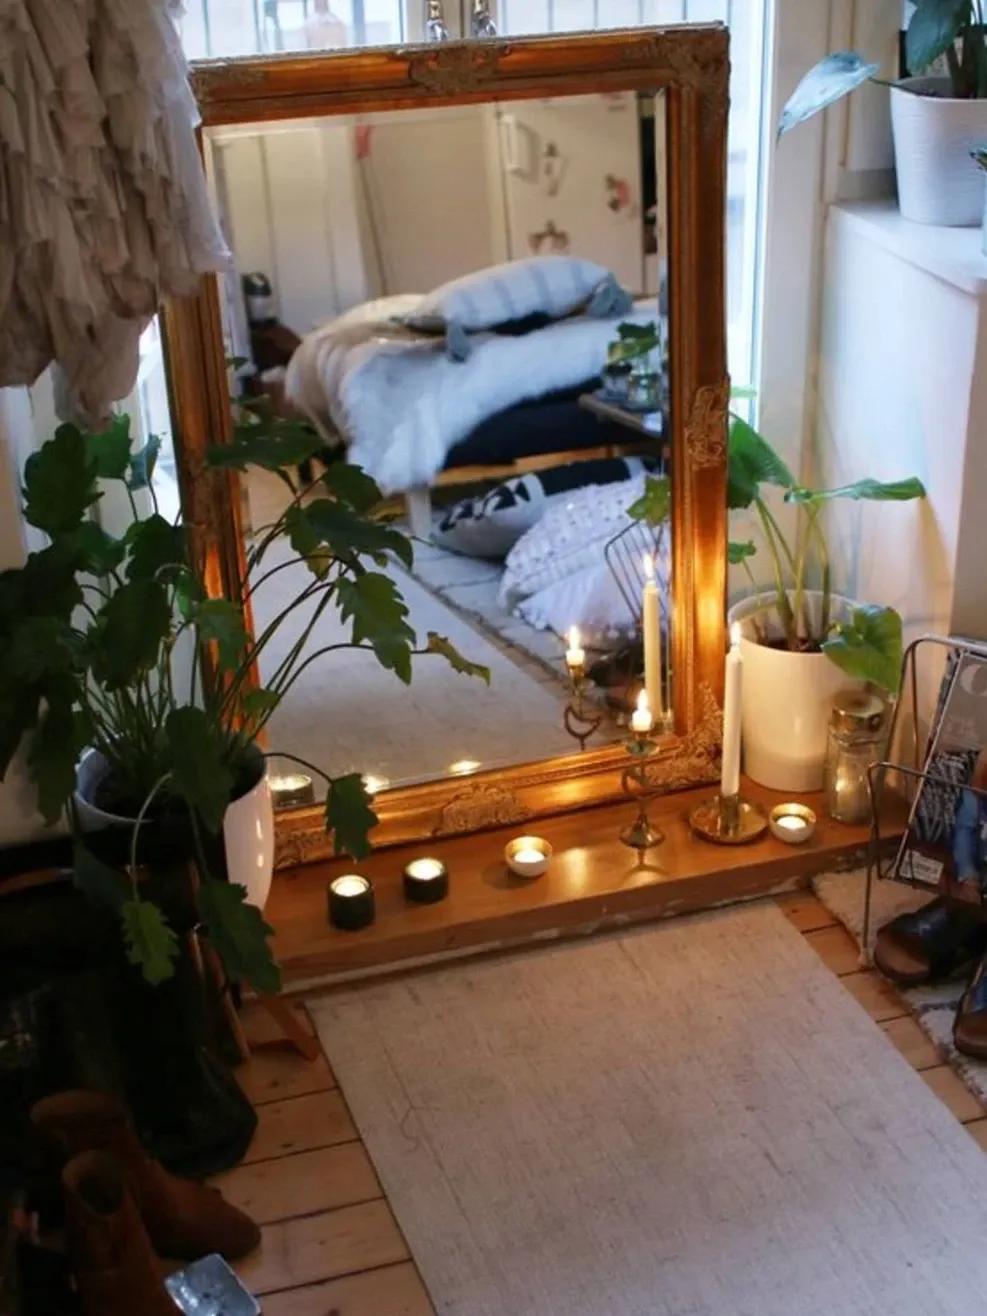 yoga inspired bedroom - How do you organize a yoga room